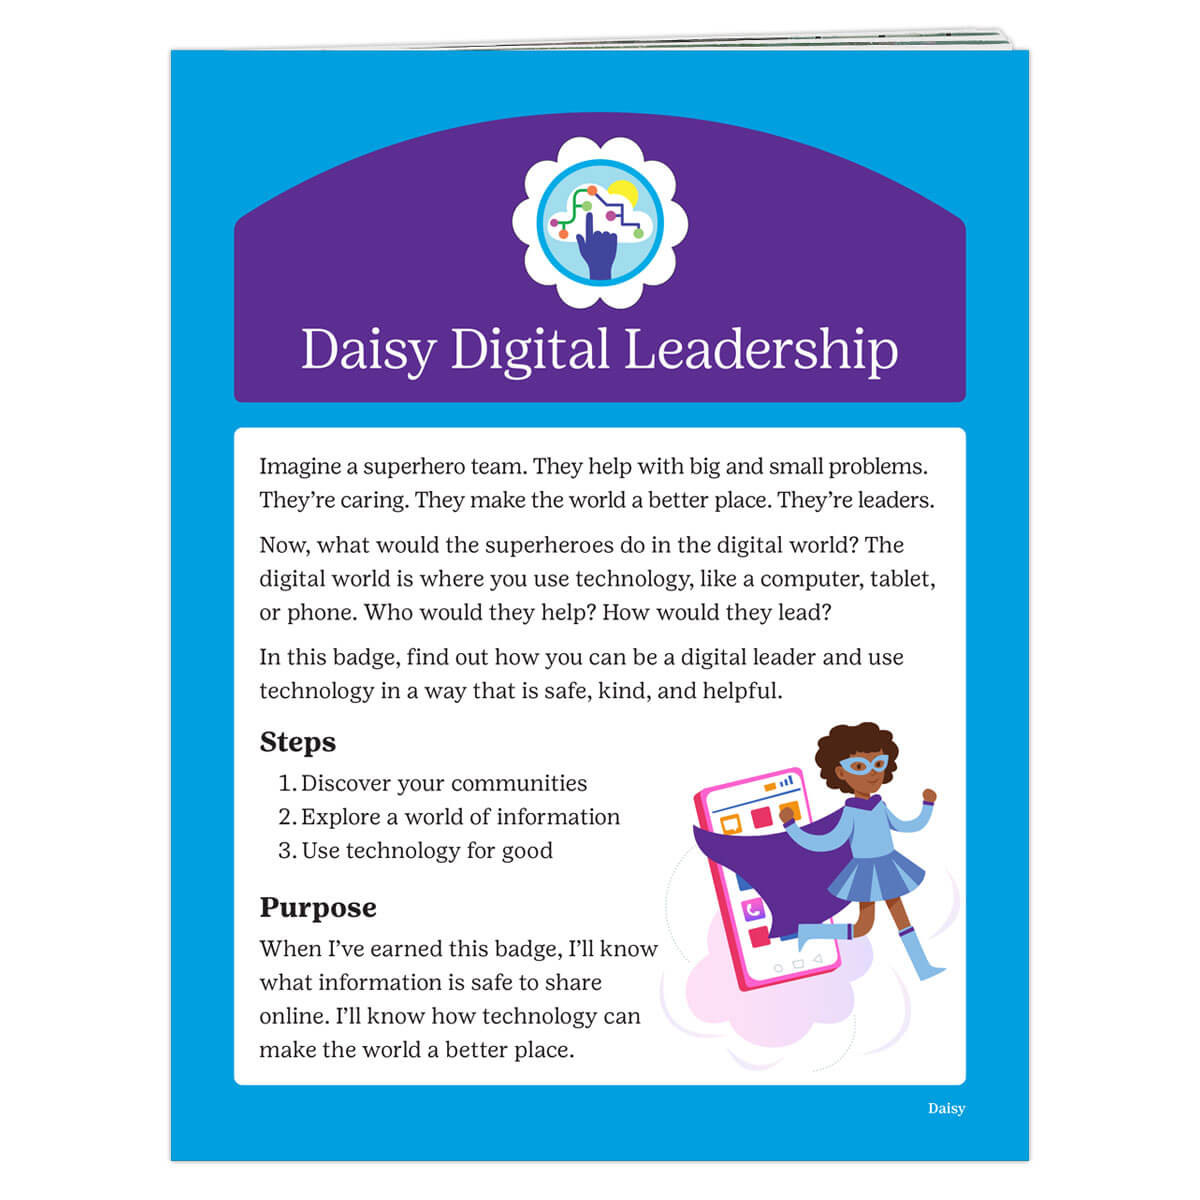 Daisy Digital Leadership REQ